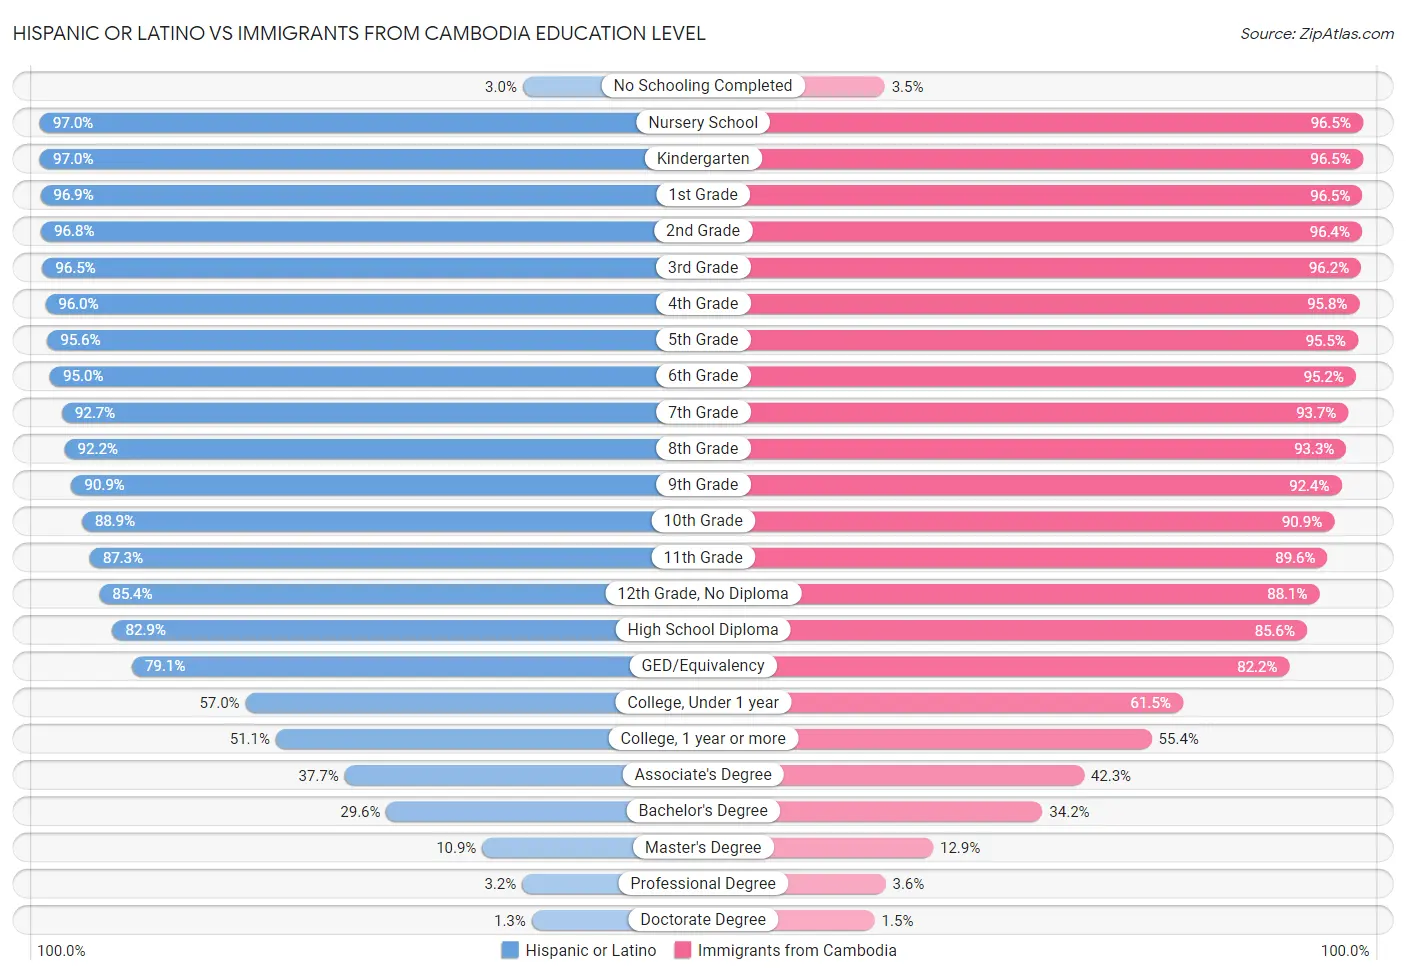 Hispanic or Latino vs Immigrants from Cambodia Education Level